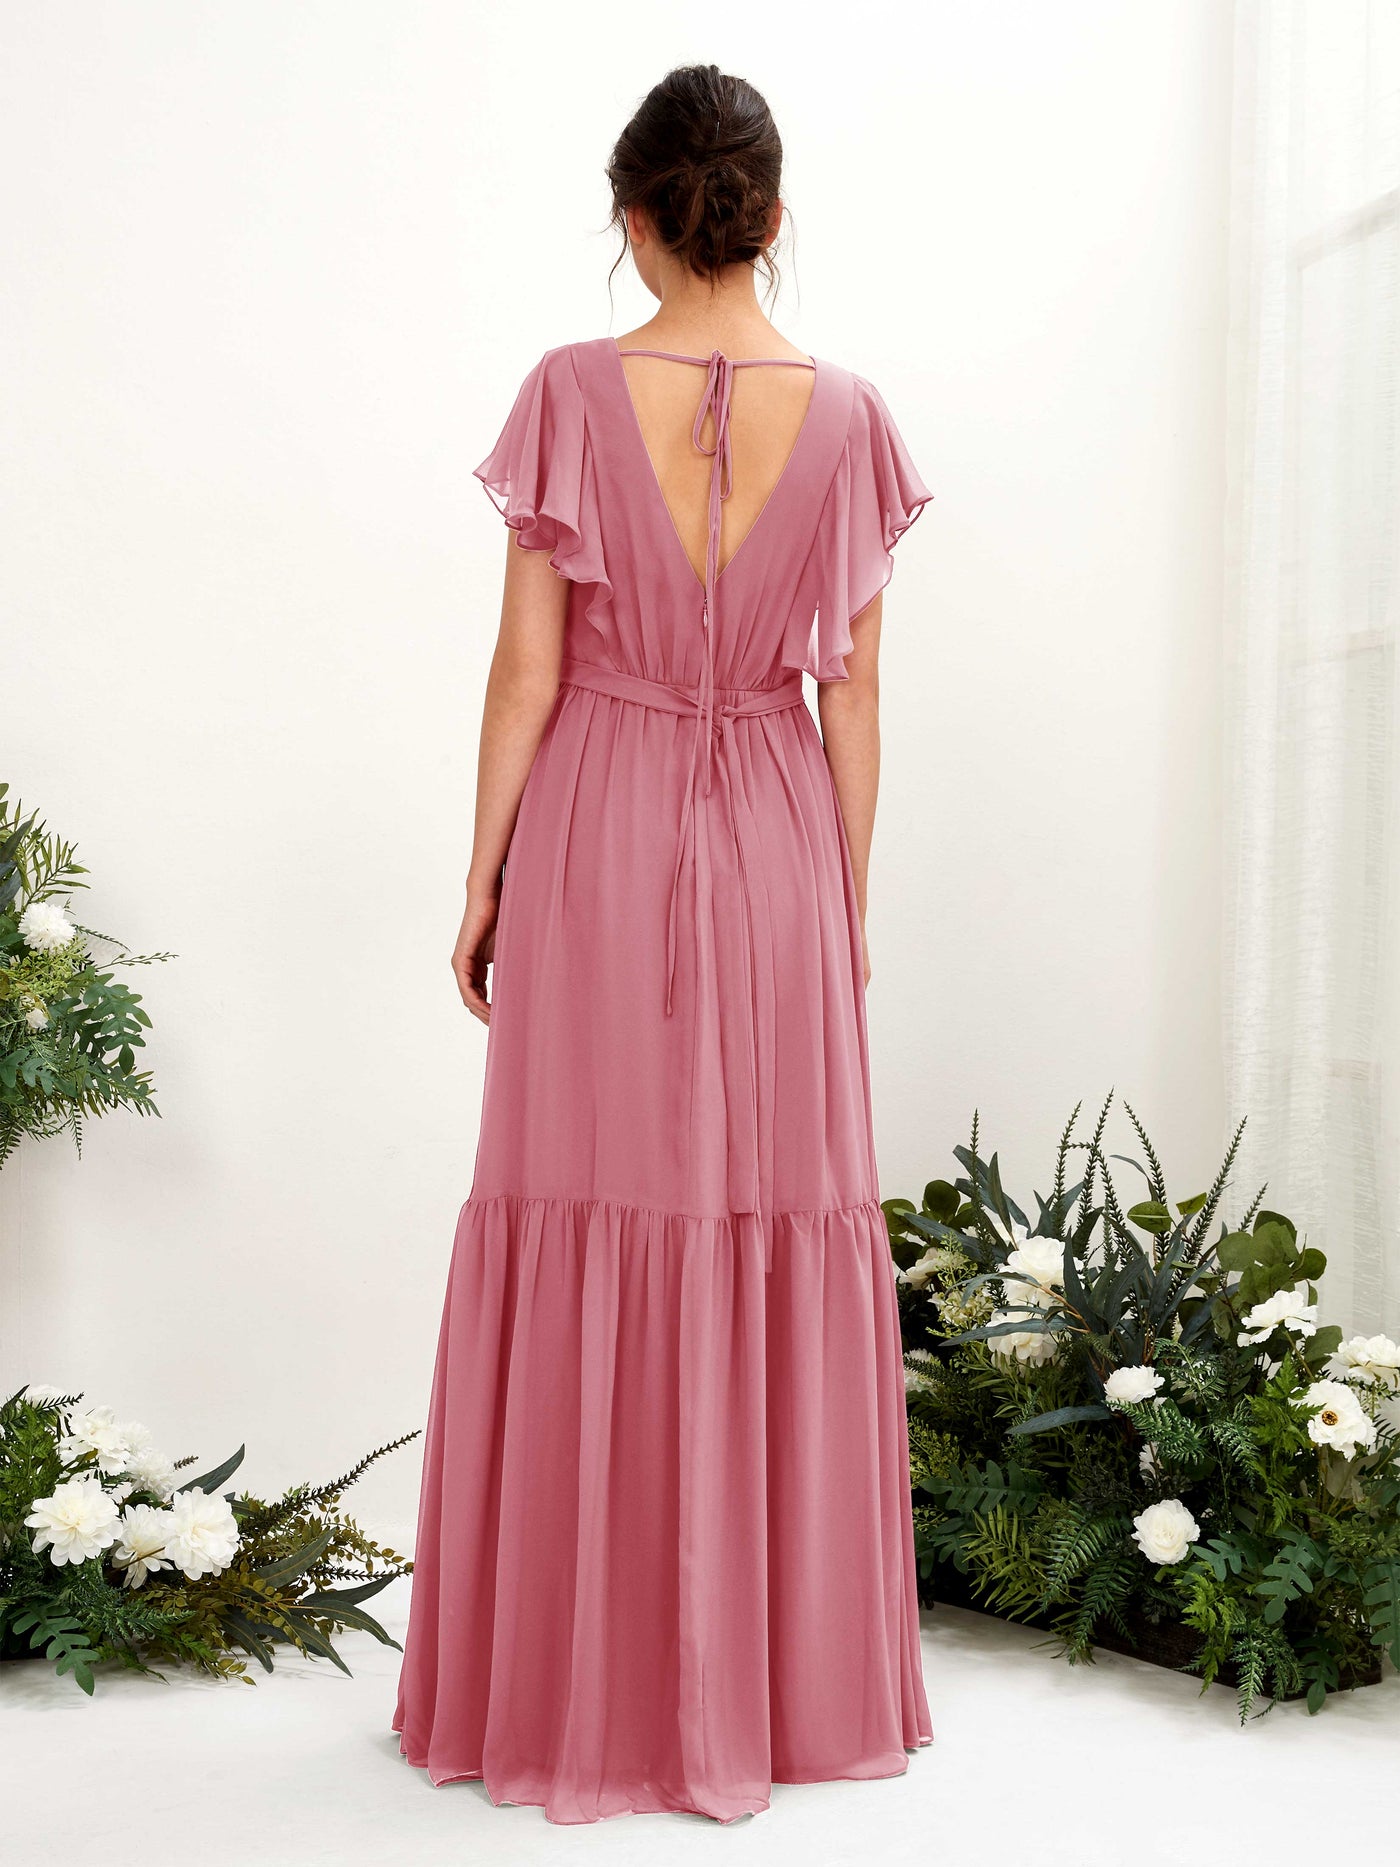 Desert Rose Bridesmaid Dresses Bridesmaid Dress A-line Chiffon V-neck Full Length Short Sleeves Wedding Party Dress (81225911)#color_desert-rose